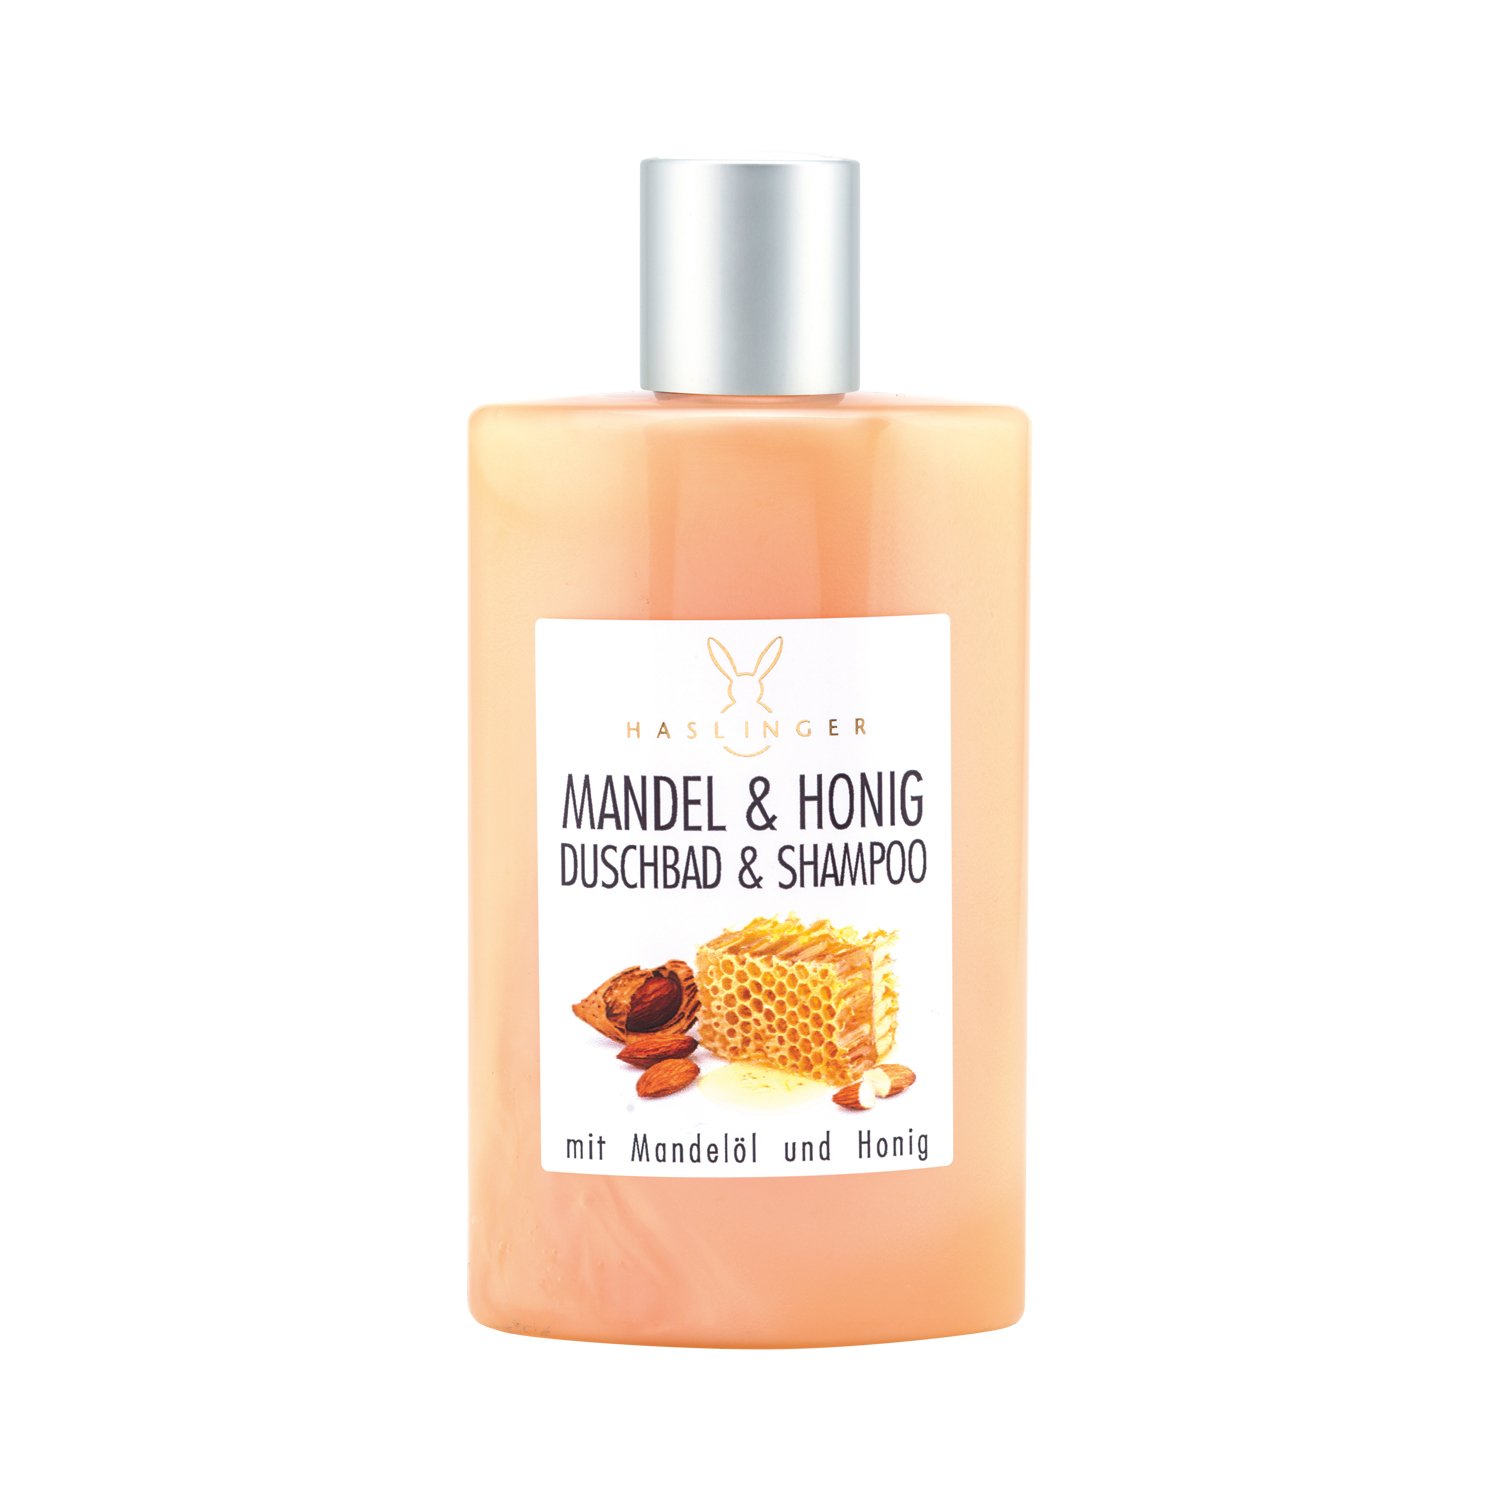 Haslinger - Duschbad & Shampoo - Mandelöl & Honig